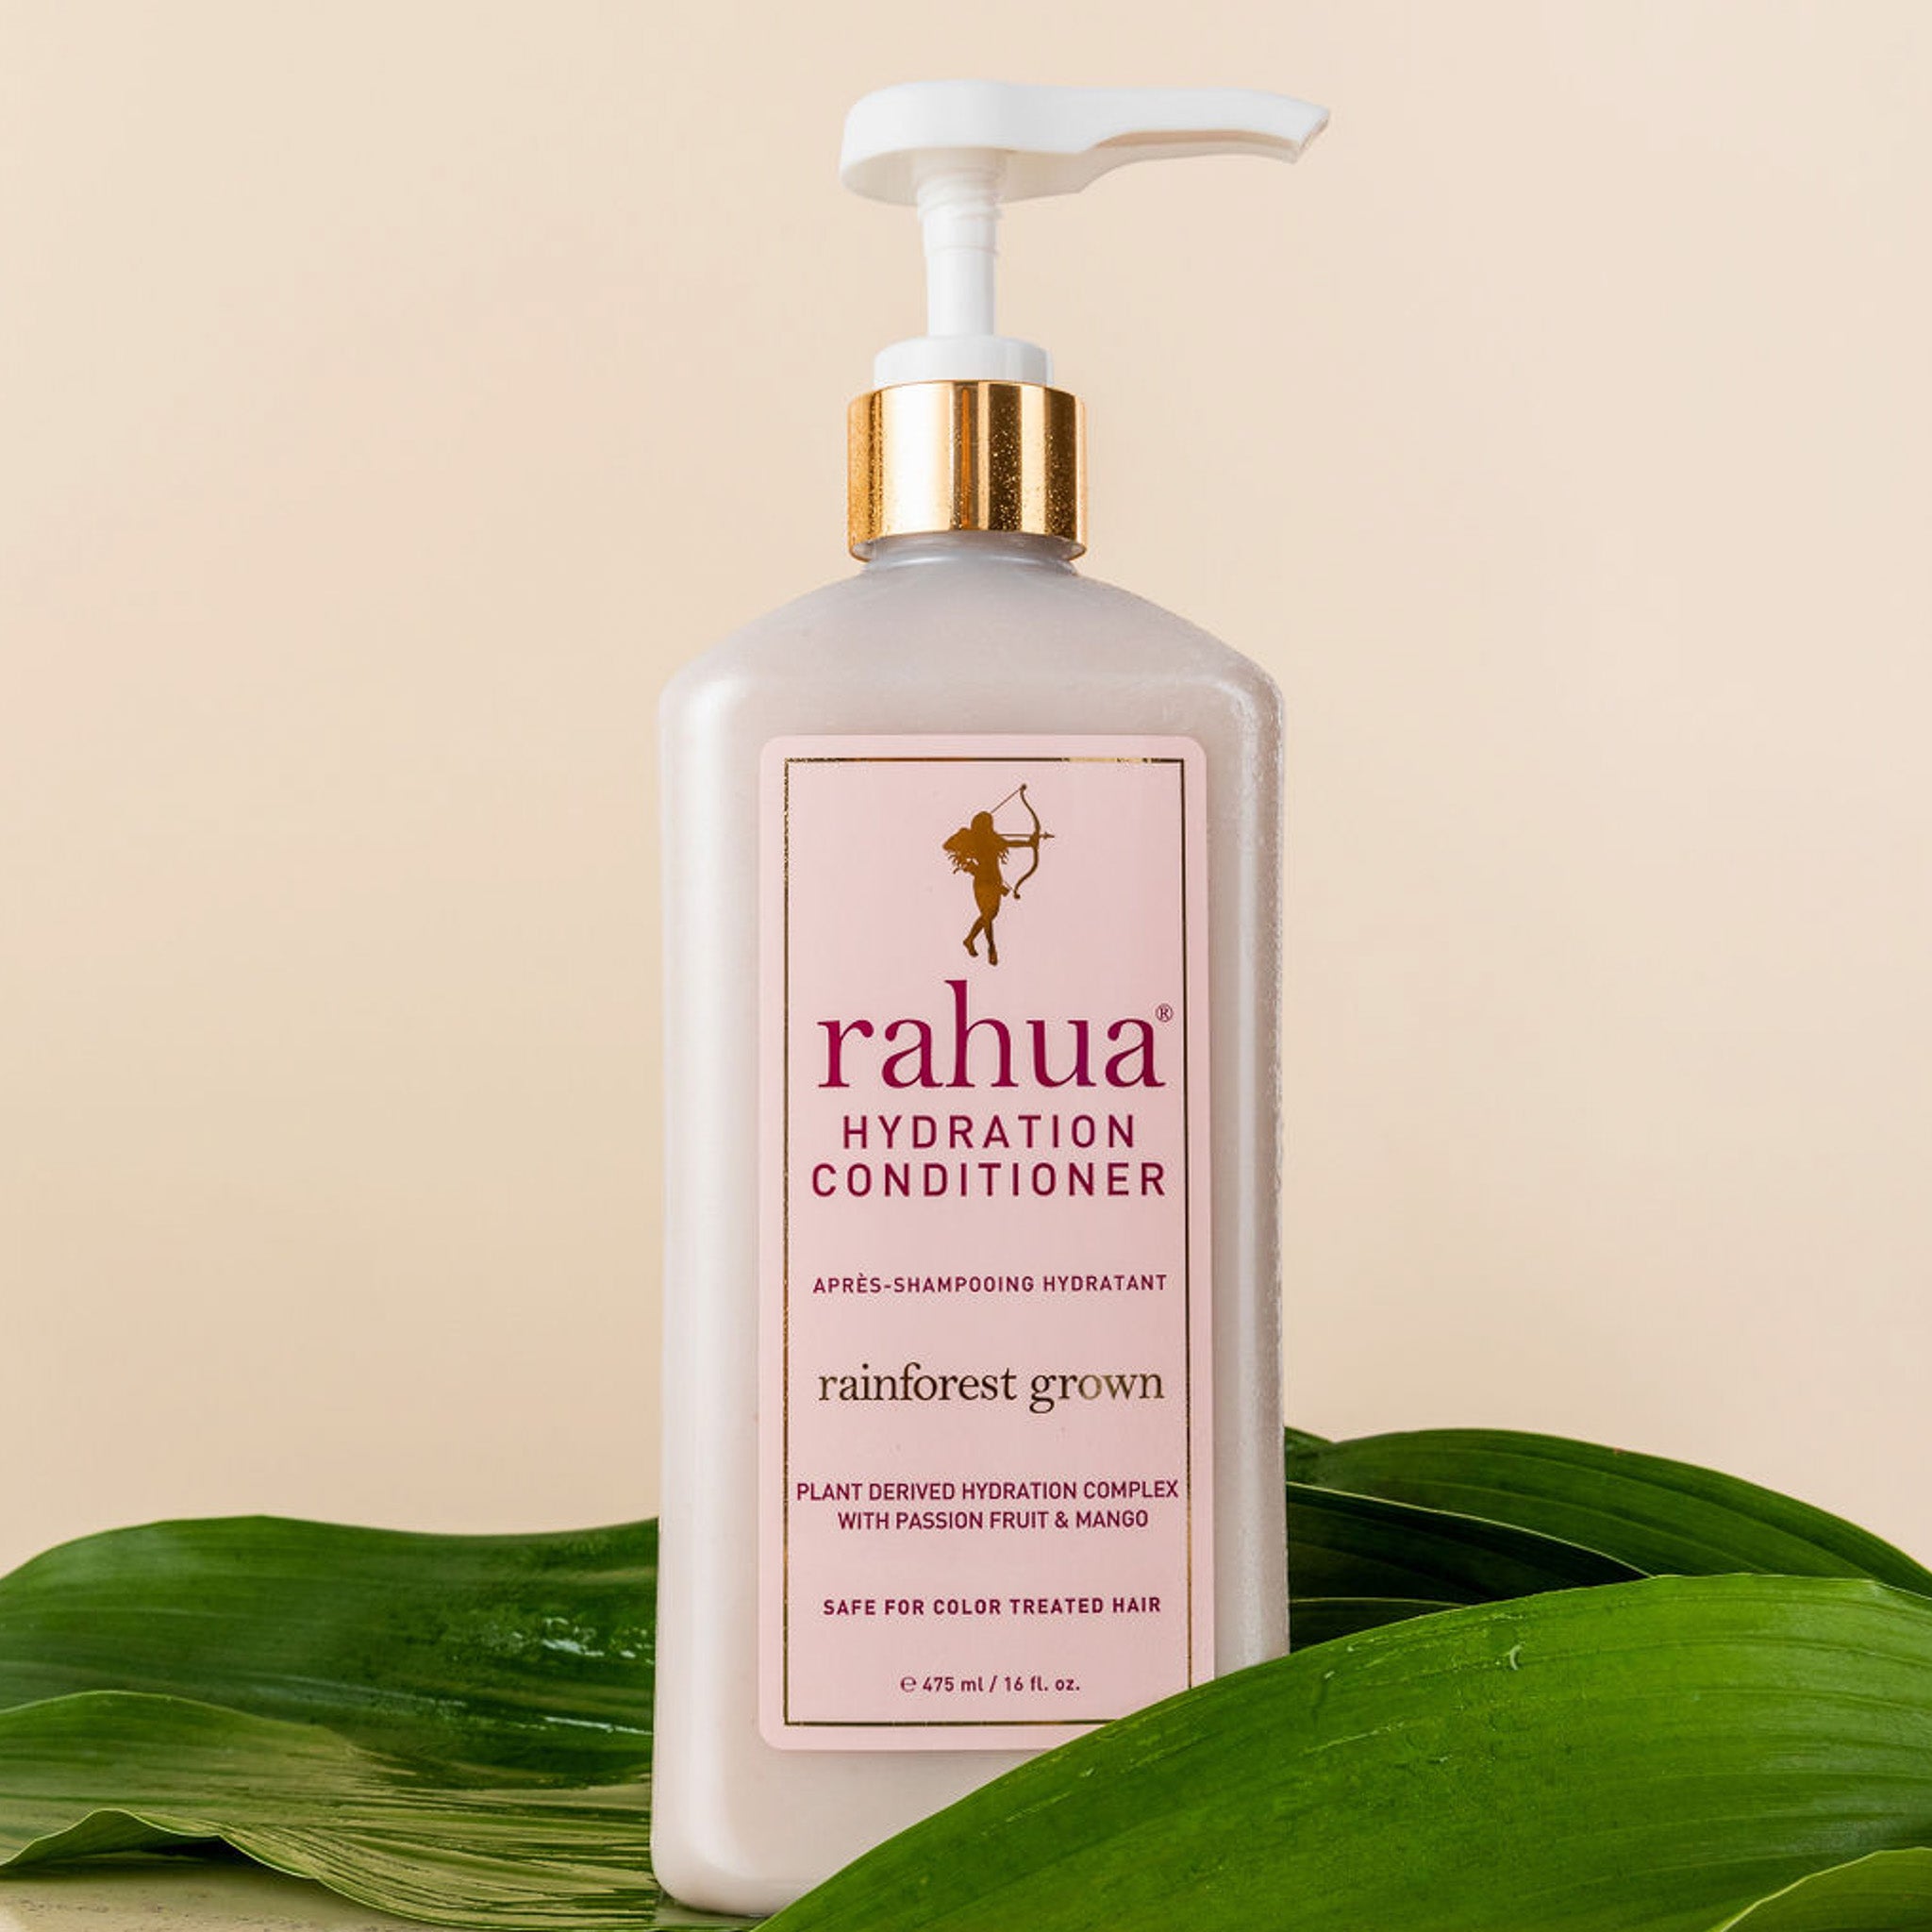 Rahua® Hydration Conditioner - Lush Pump at Socialite Beauty Canada